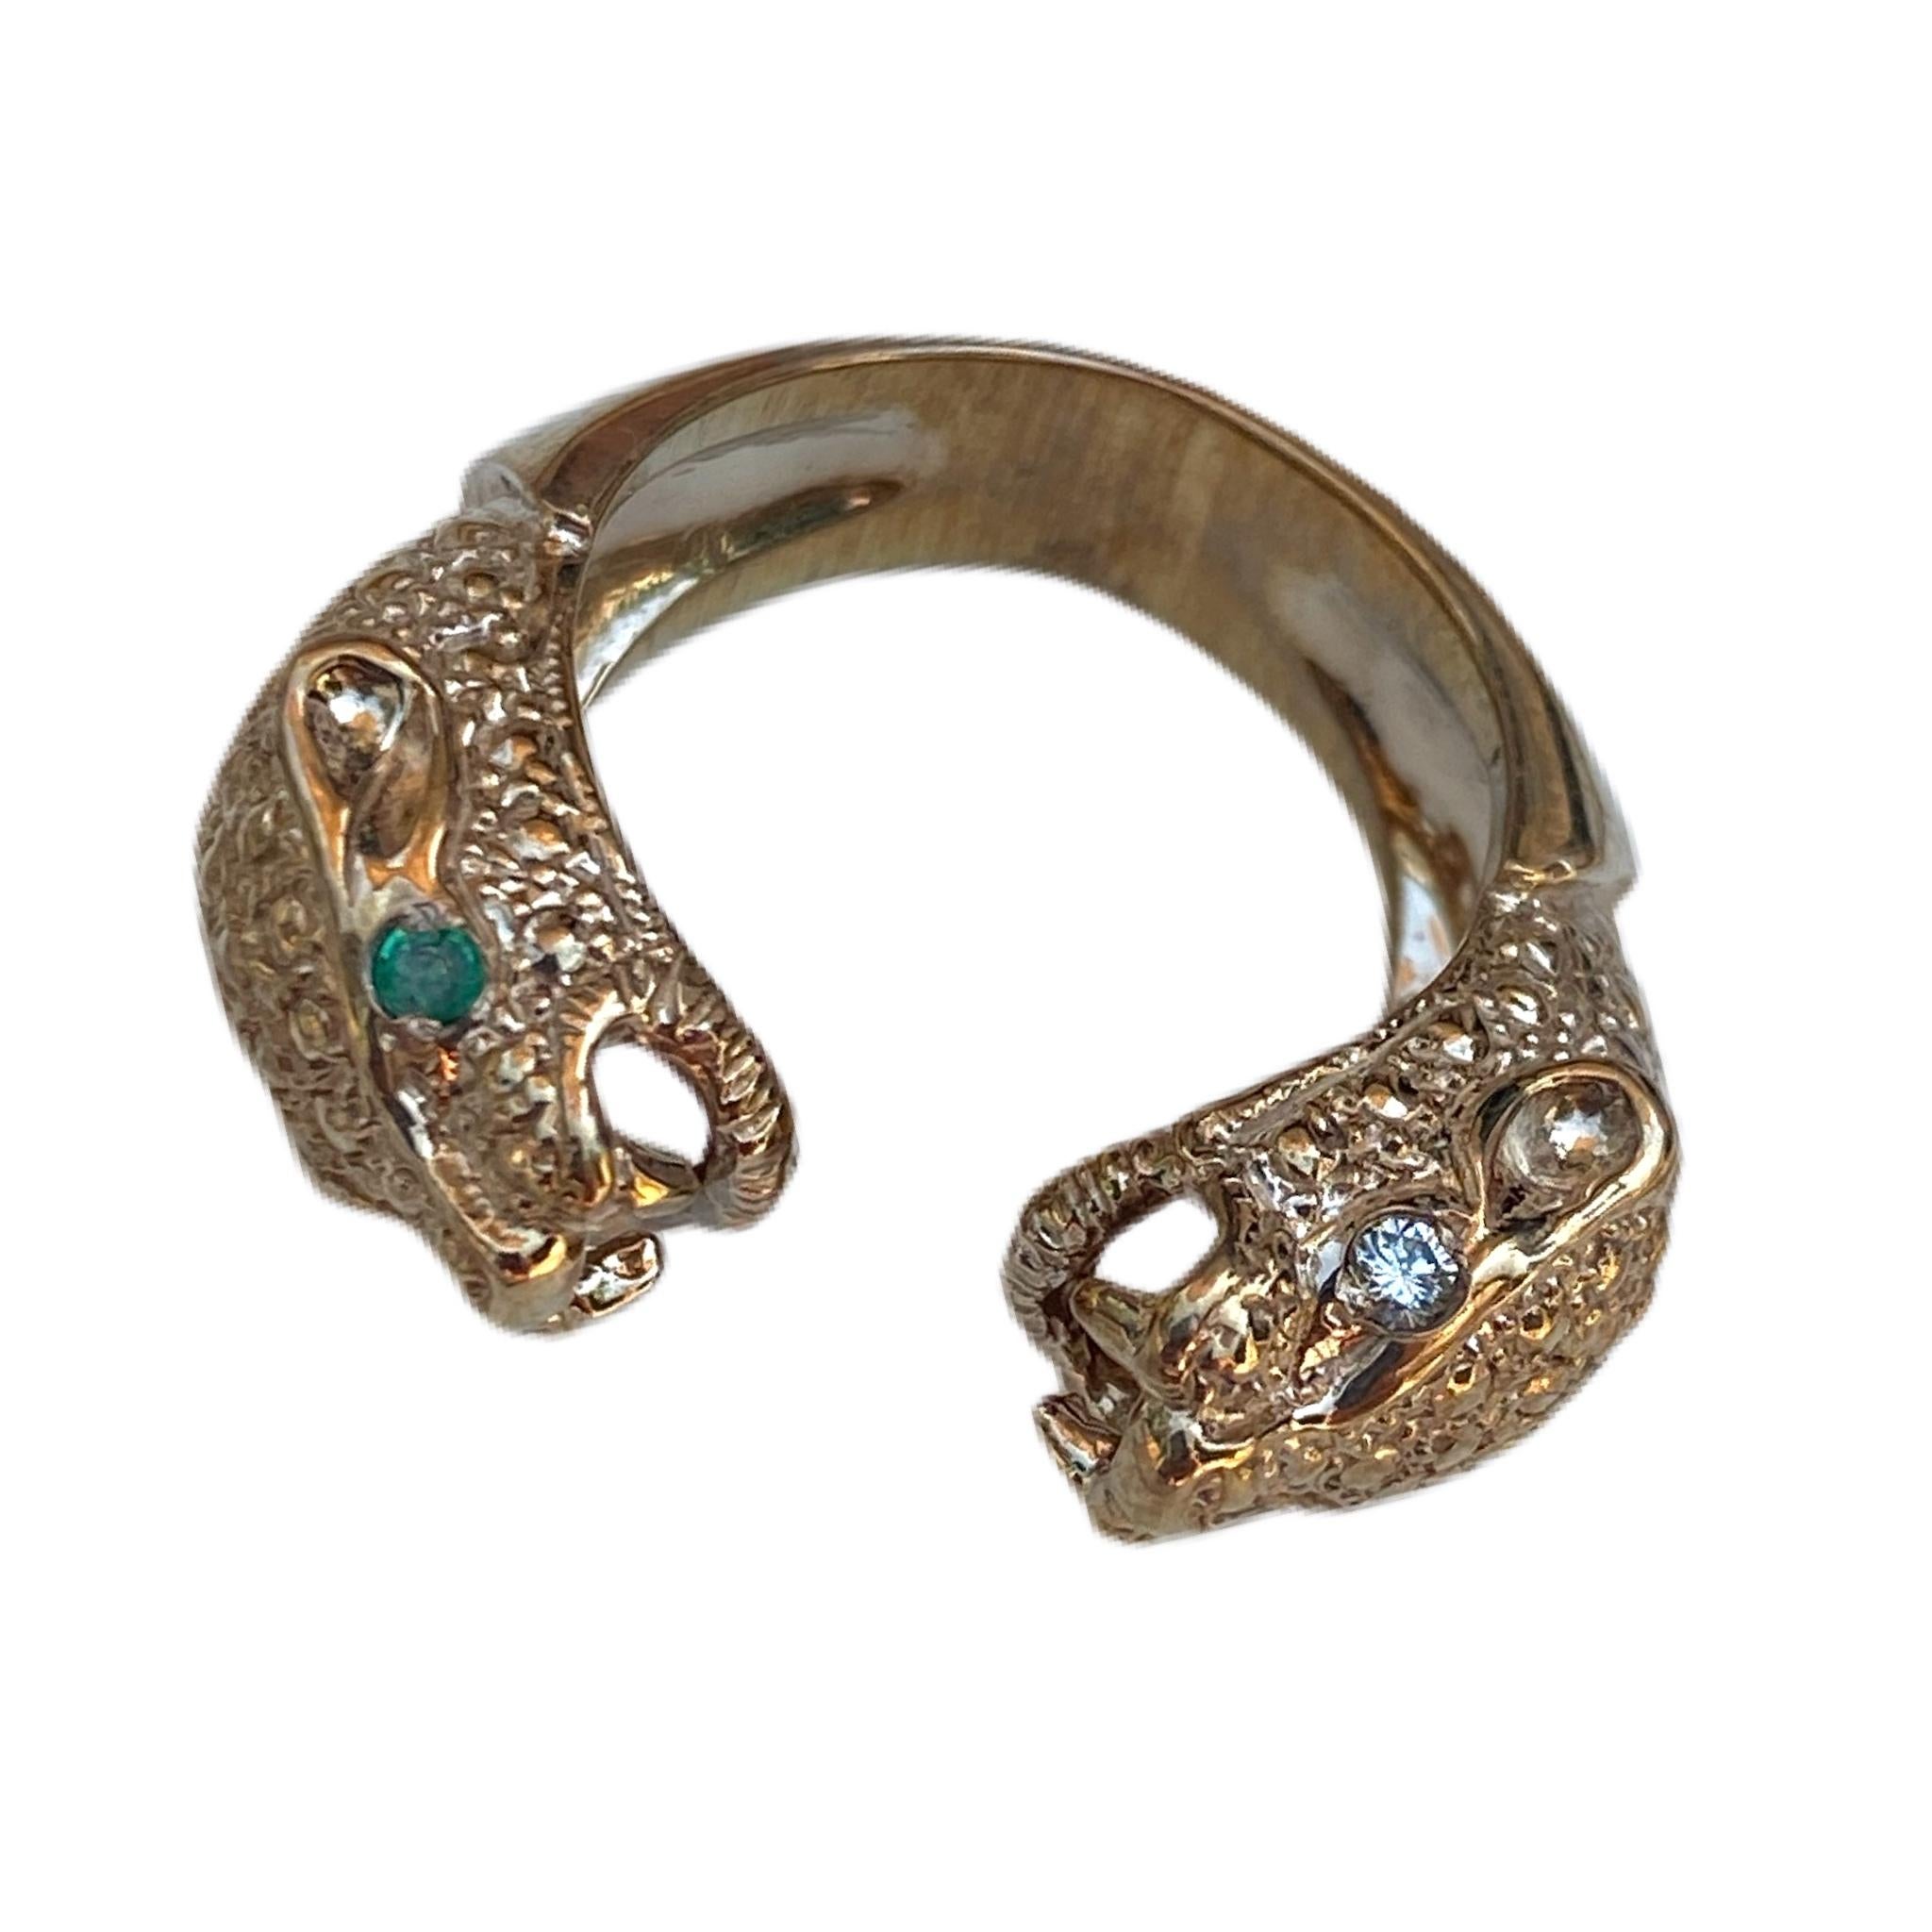 2 pcs Emerald 2 pcs White Diamond Jaguar Ring 14k Gold Vermeil Animal Resizable J Dauphin
J DAUPHIN Ring 